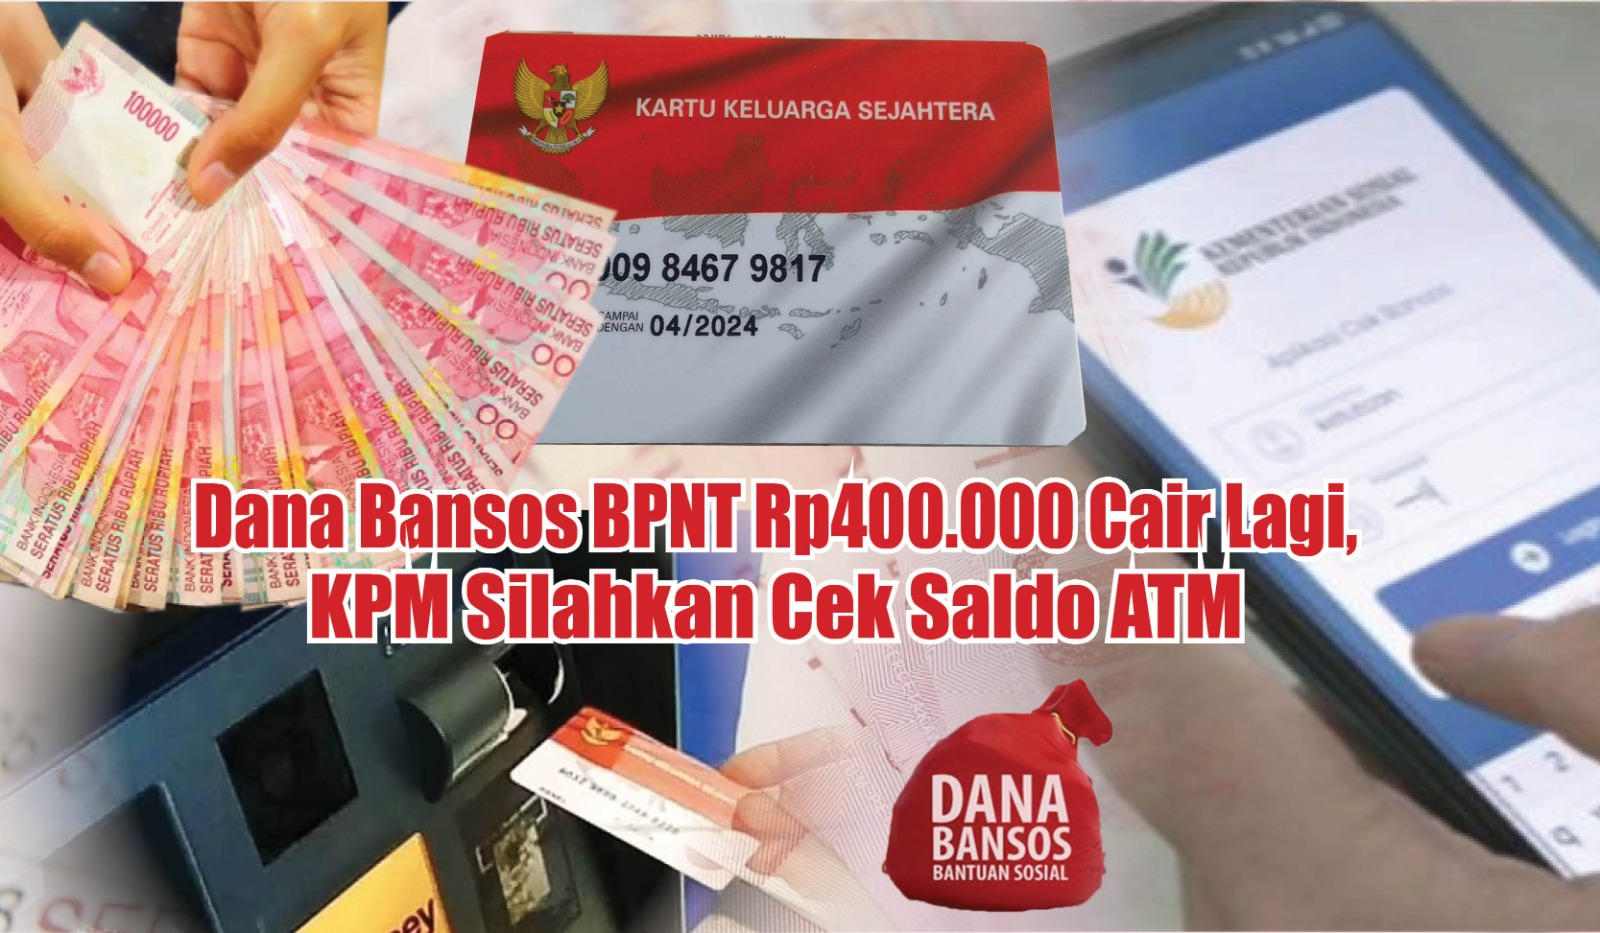 September Gembira! Dana Bansos BPNT Rp400.000 Cair Lagi, KPM Silahkan Cek Saldo ATM